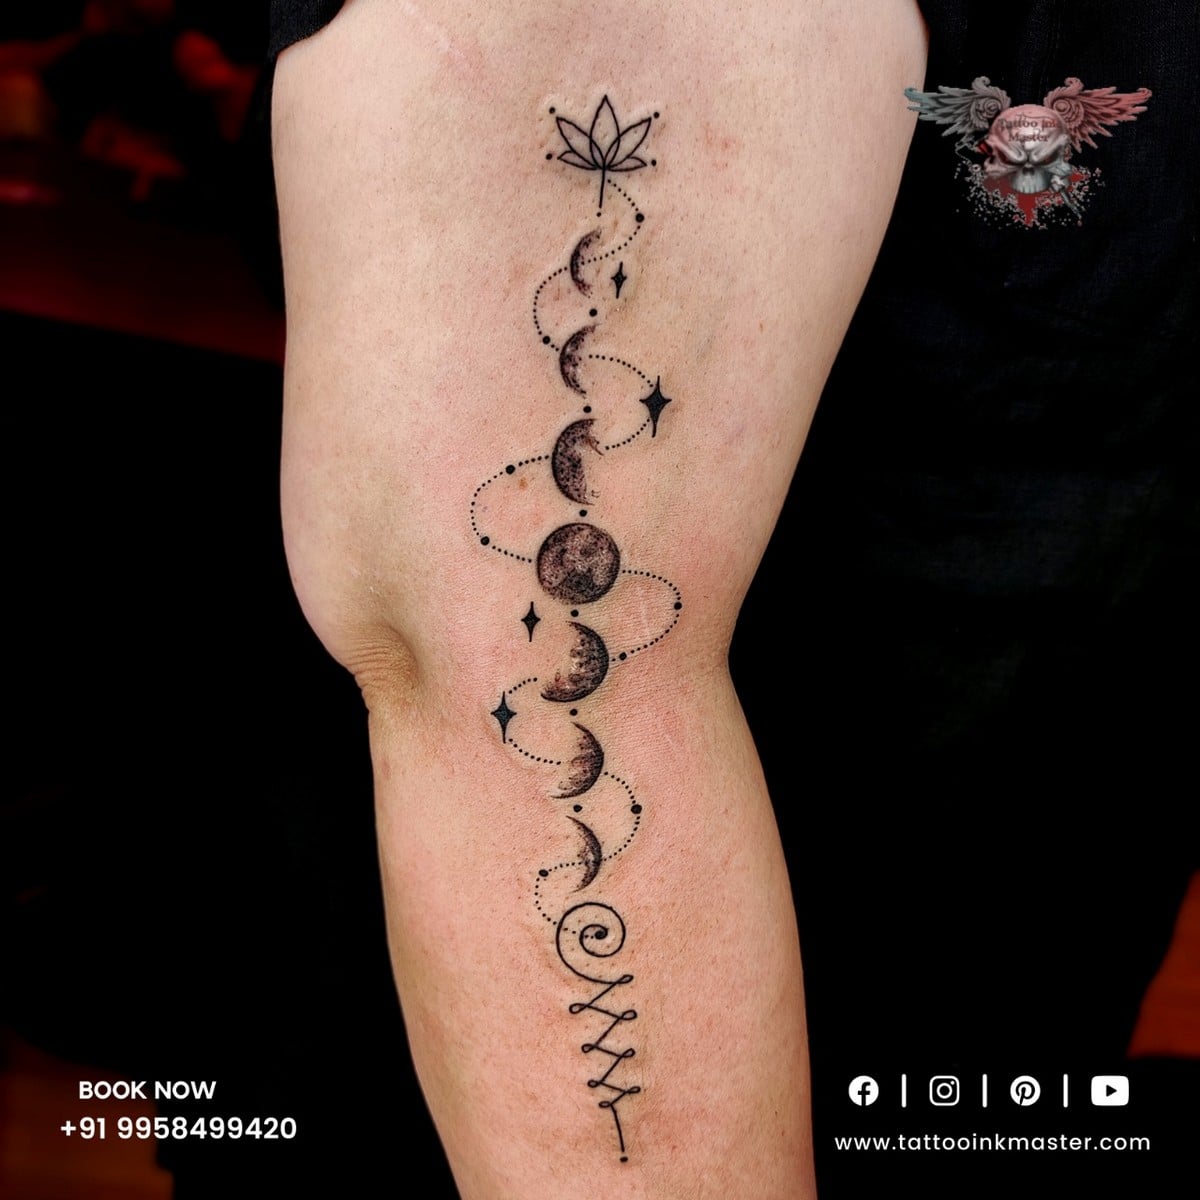 Length Wise Minimalistic Yet Beautiful Tattoo | Tattoo Ink Master